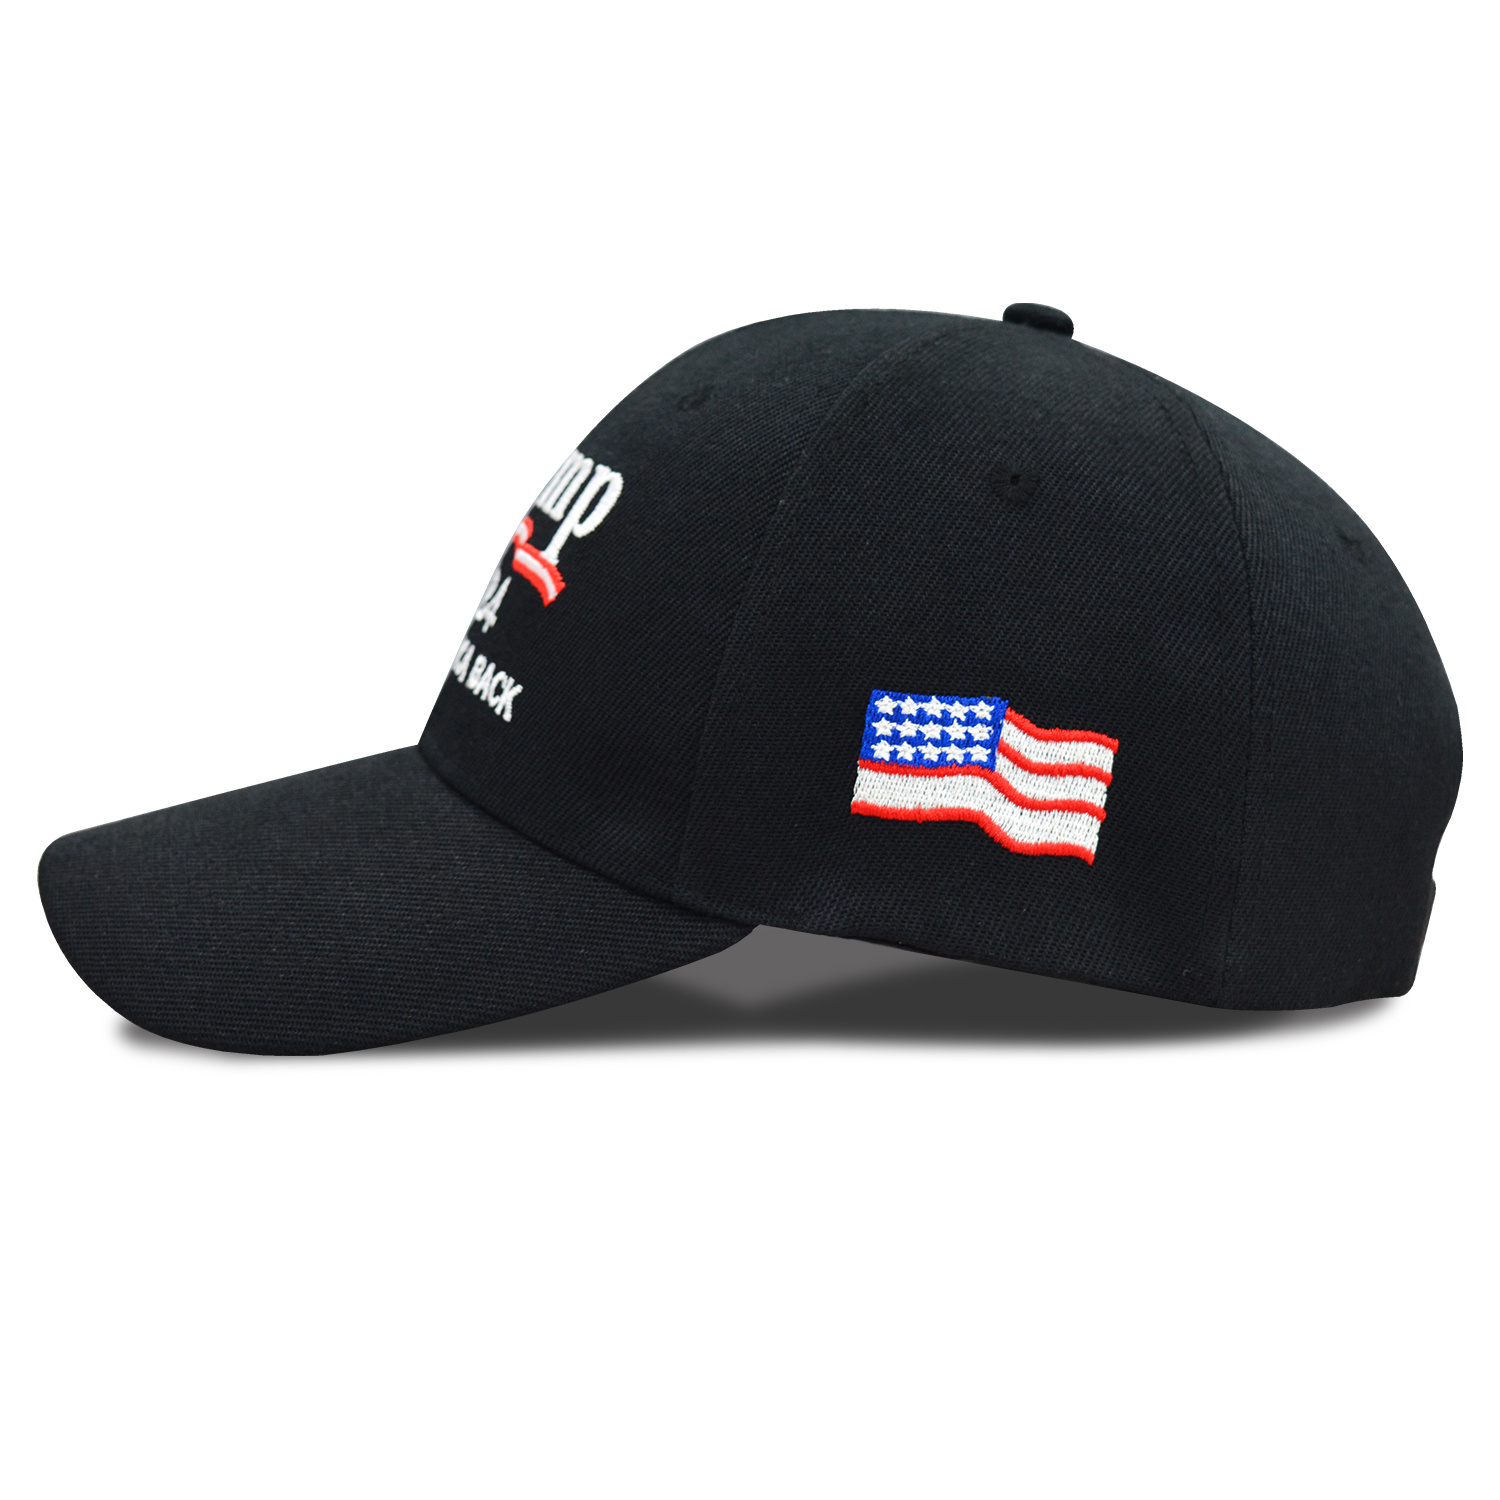 Trump take America Back flag flying embroidered baseball cap